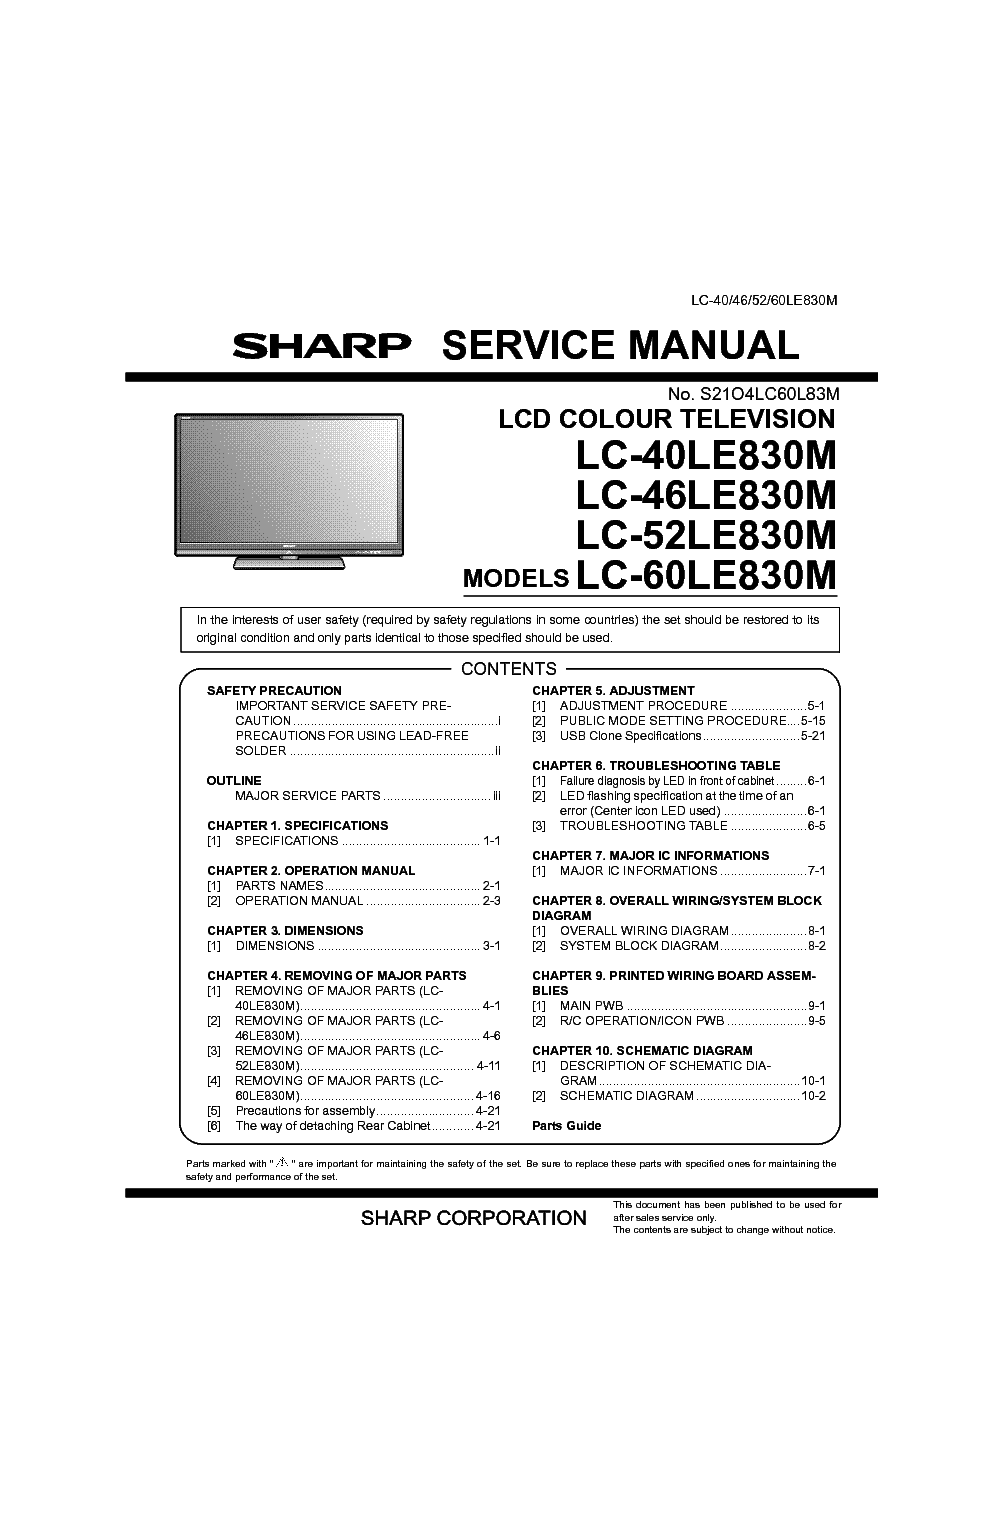 SHARP LC-40-60LE830M-SM service manual (1st page)